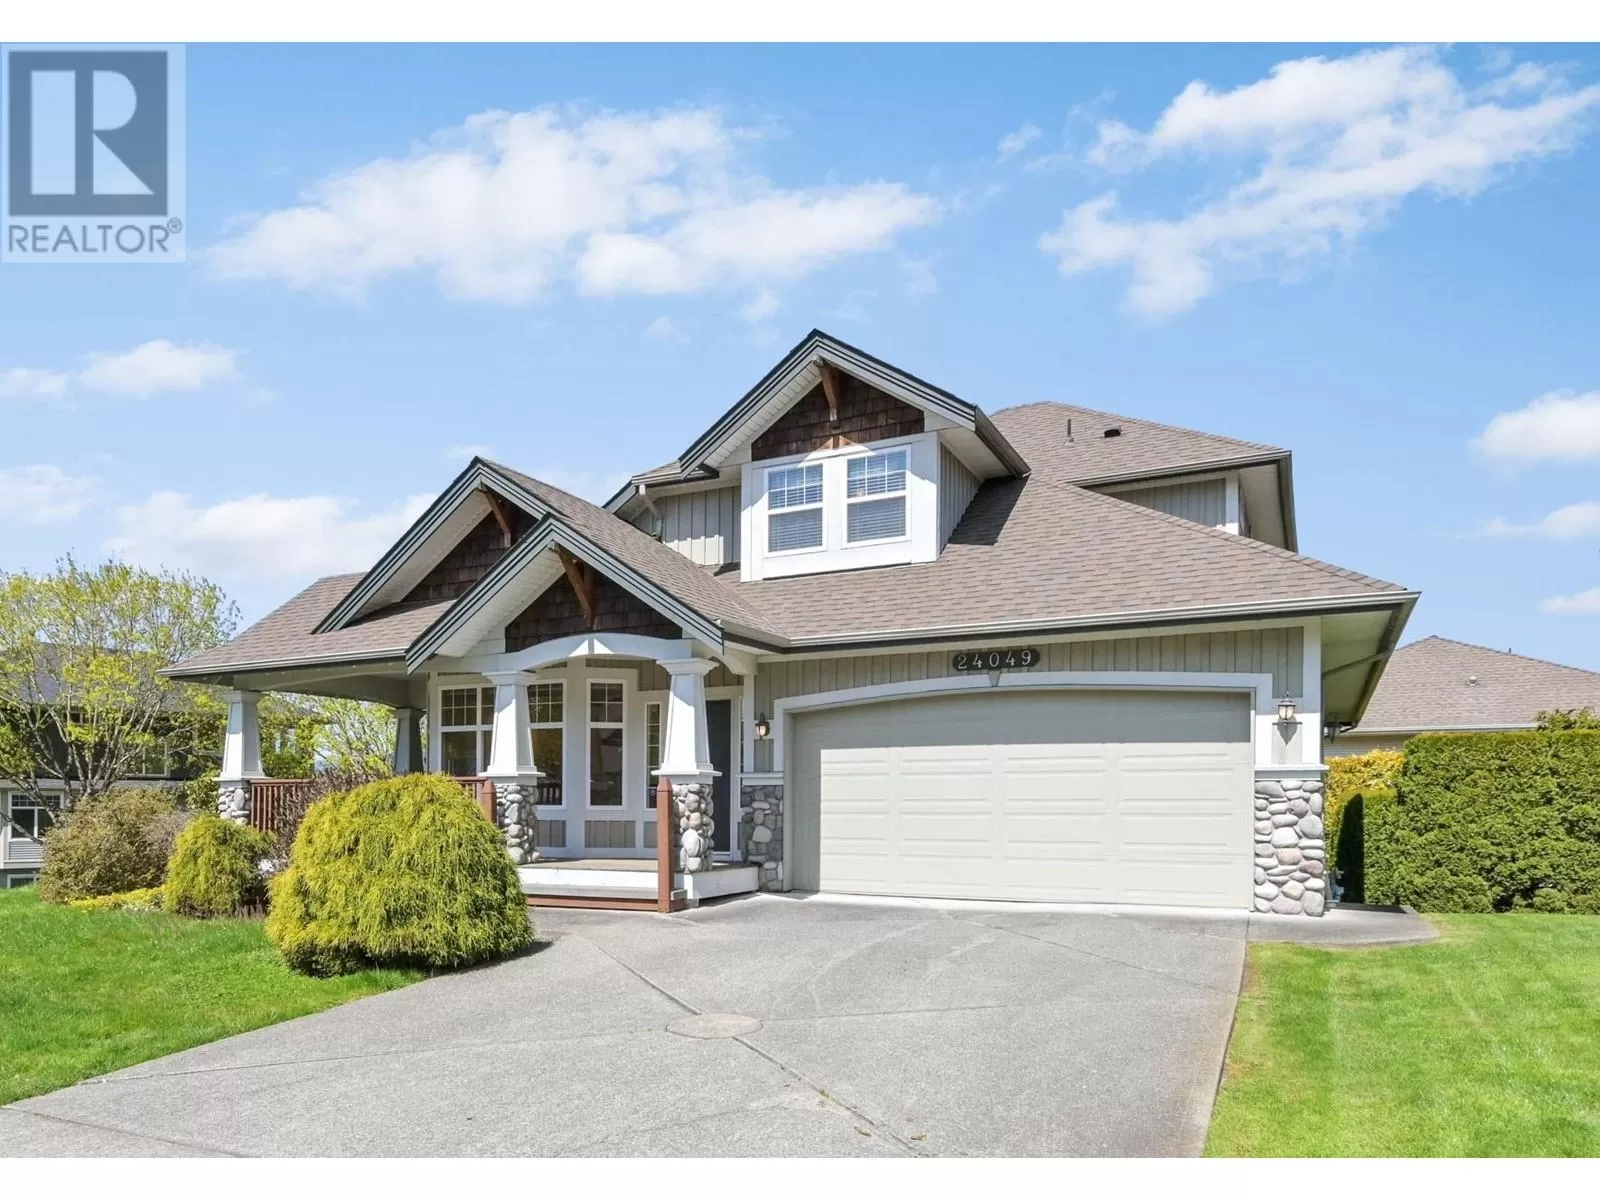 House for rent: 24049 106 Avenue, Maple Ridge, British Columbia V2W 2B1